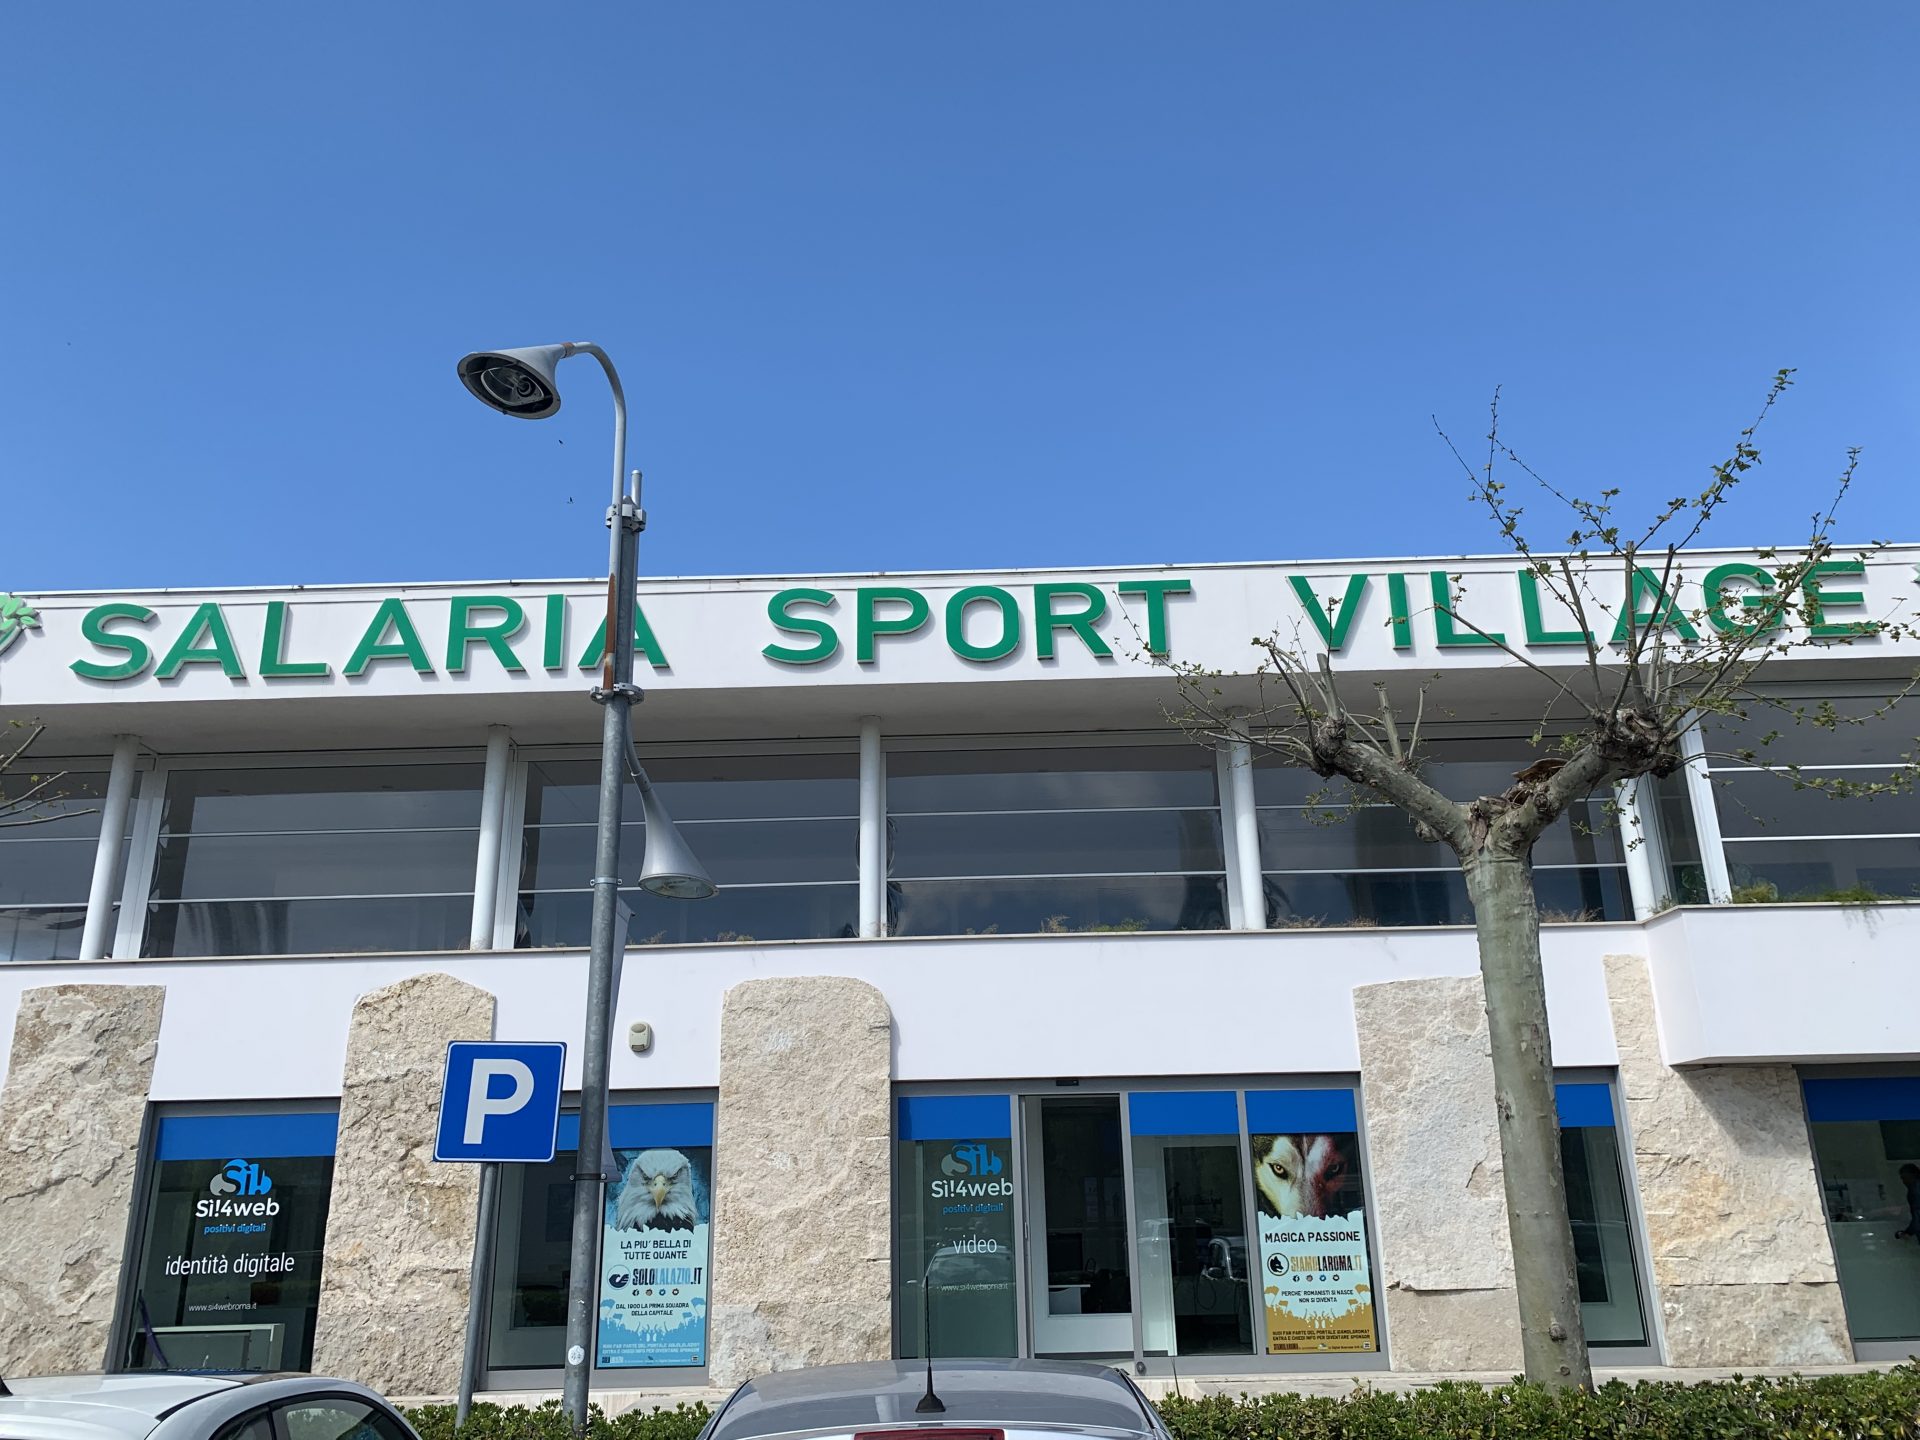 Salaria Sport Village